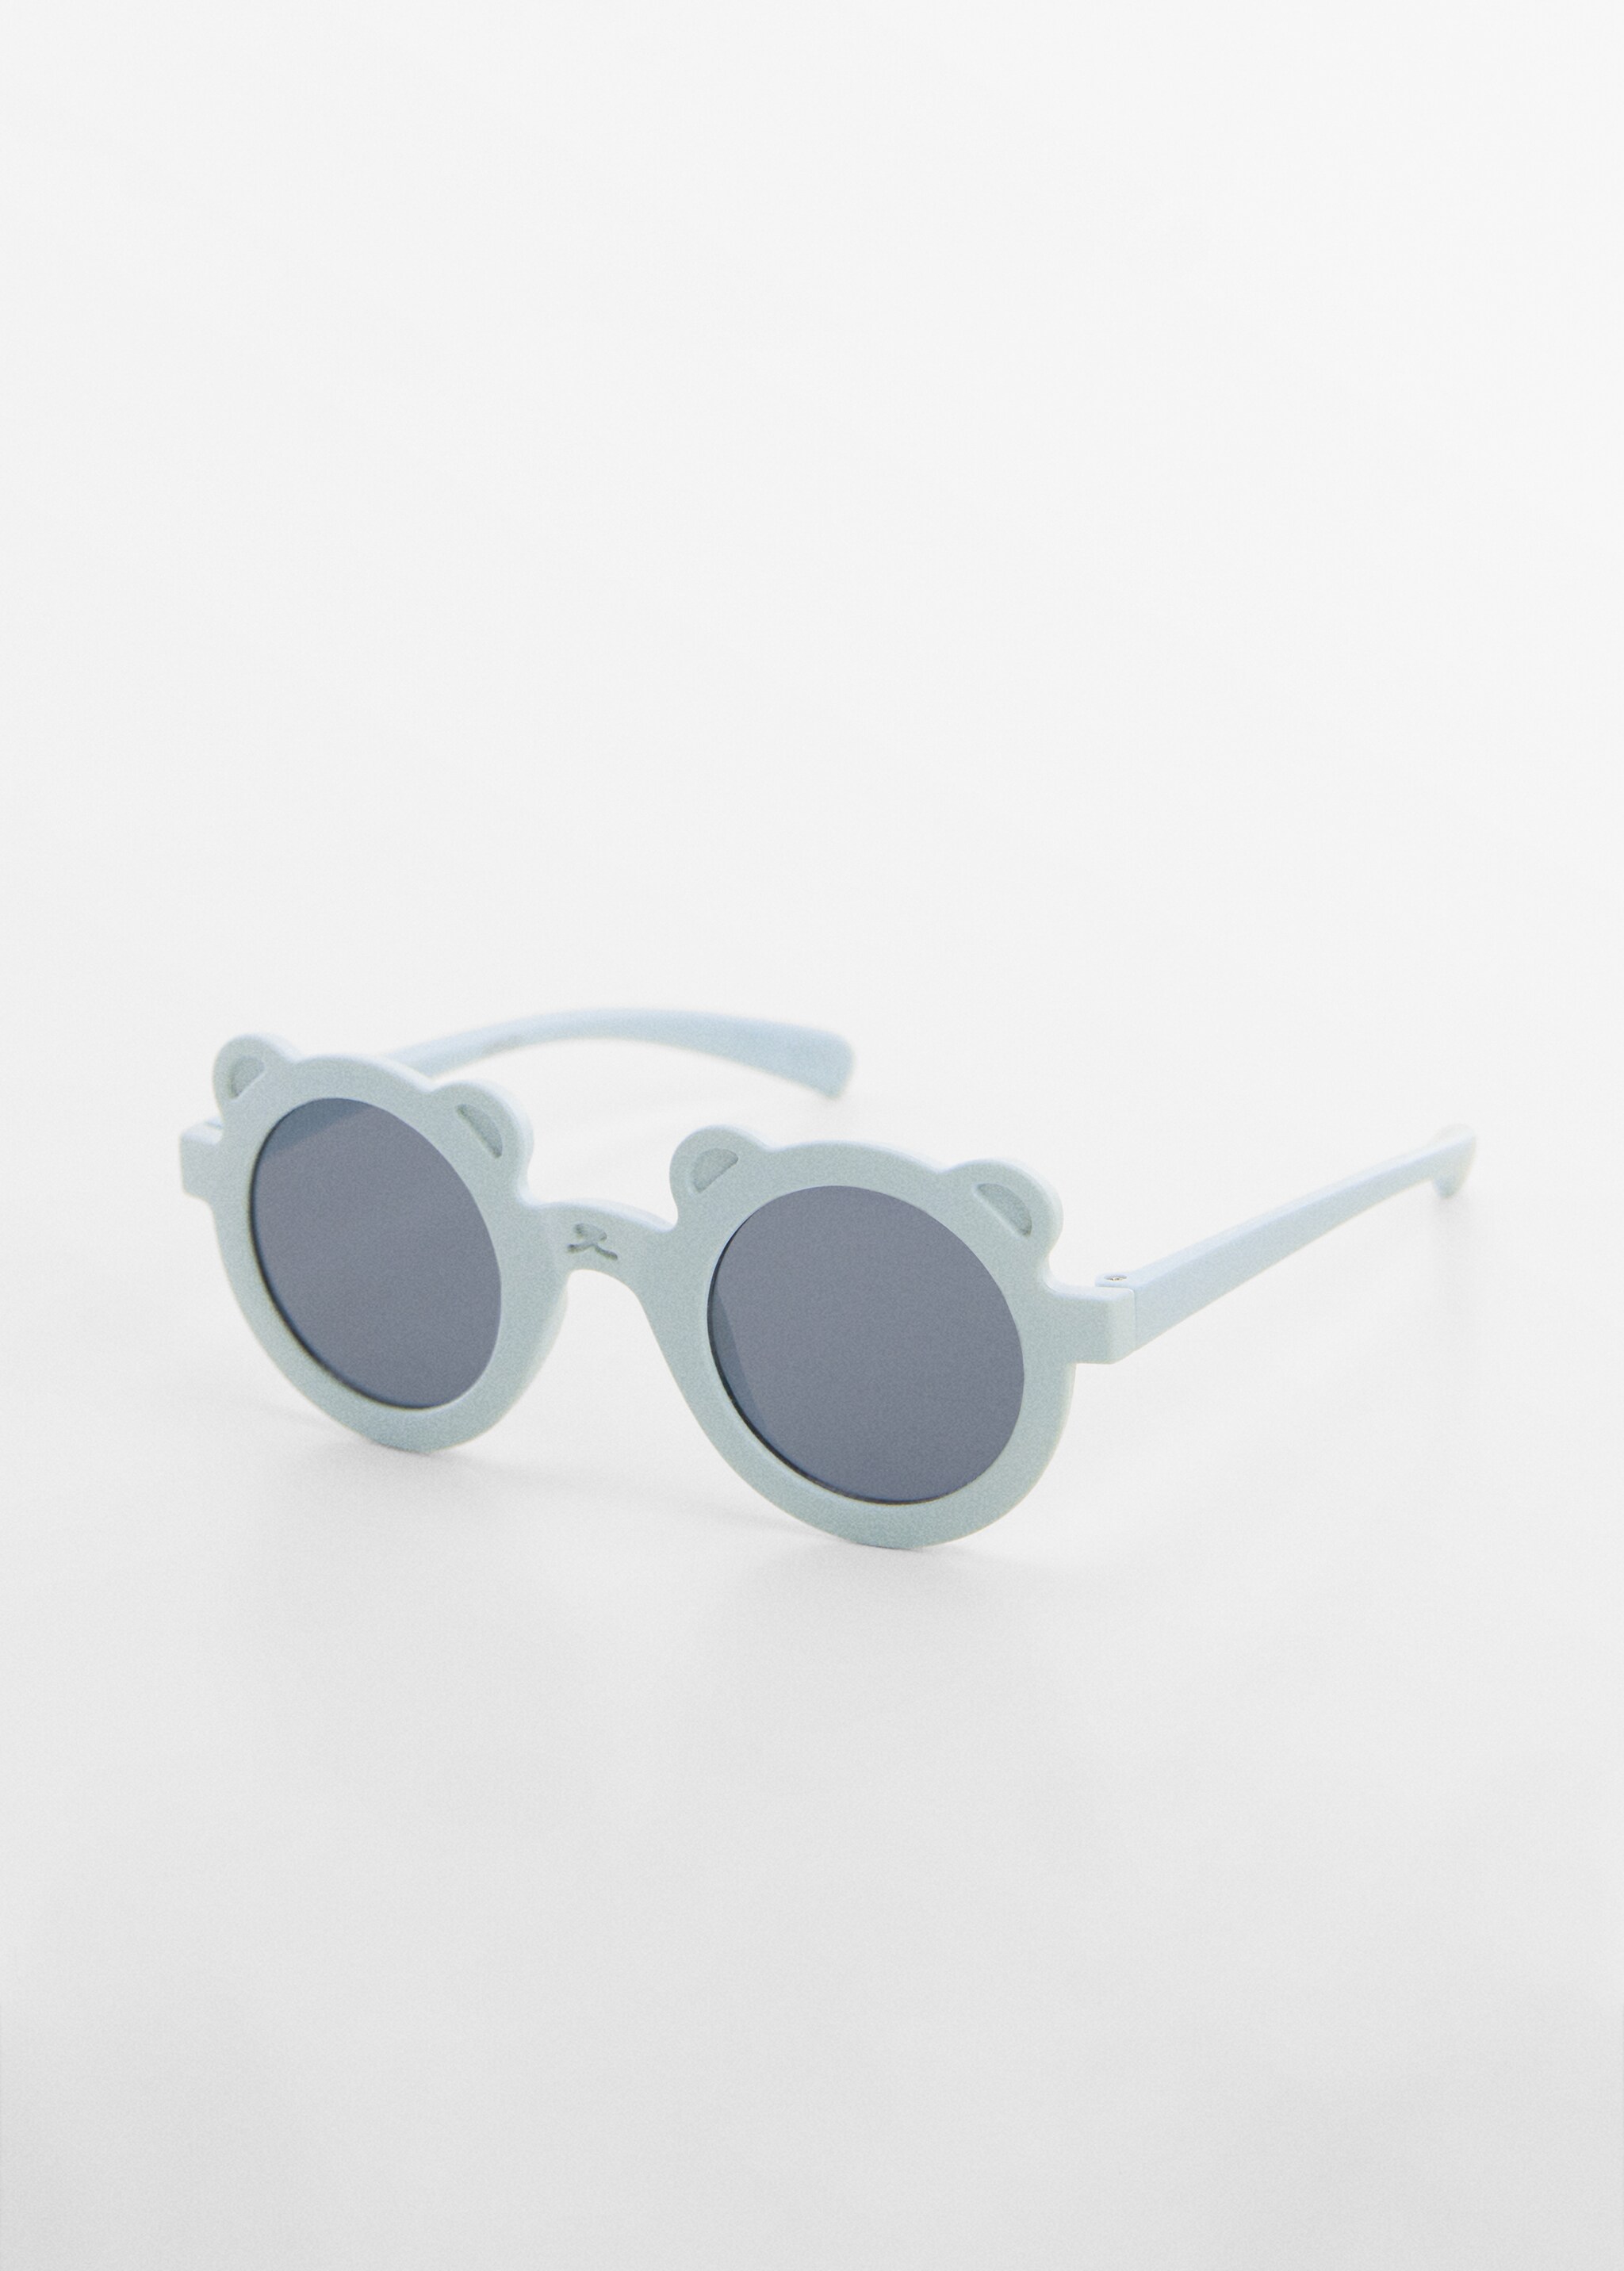 Teddy bear sunglasses - Medium plane